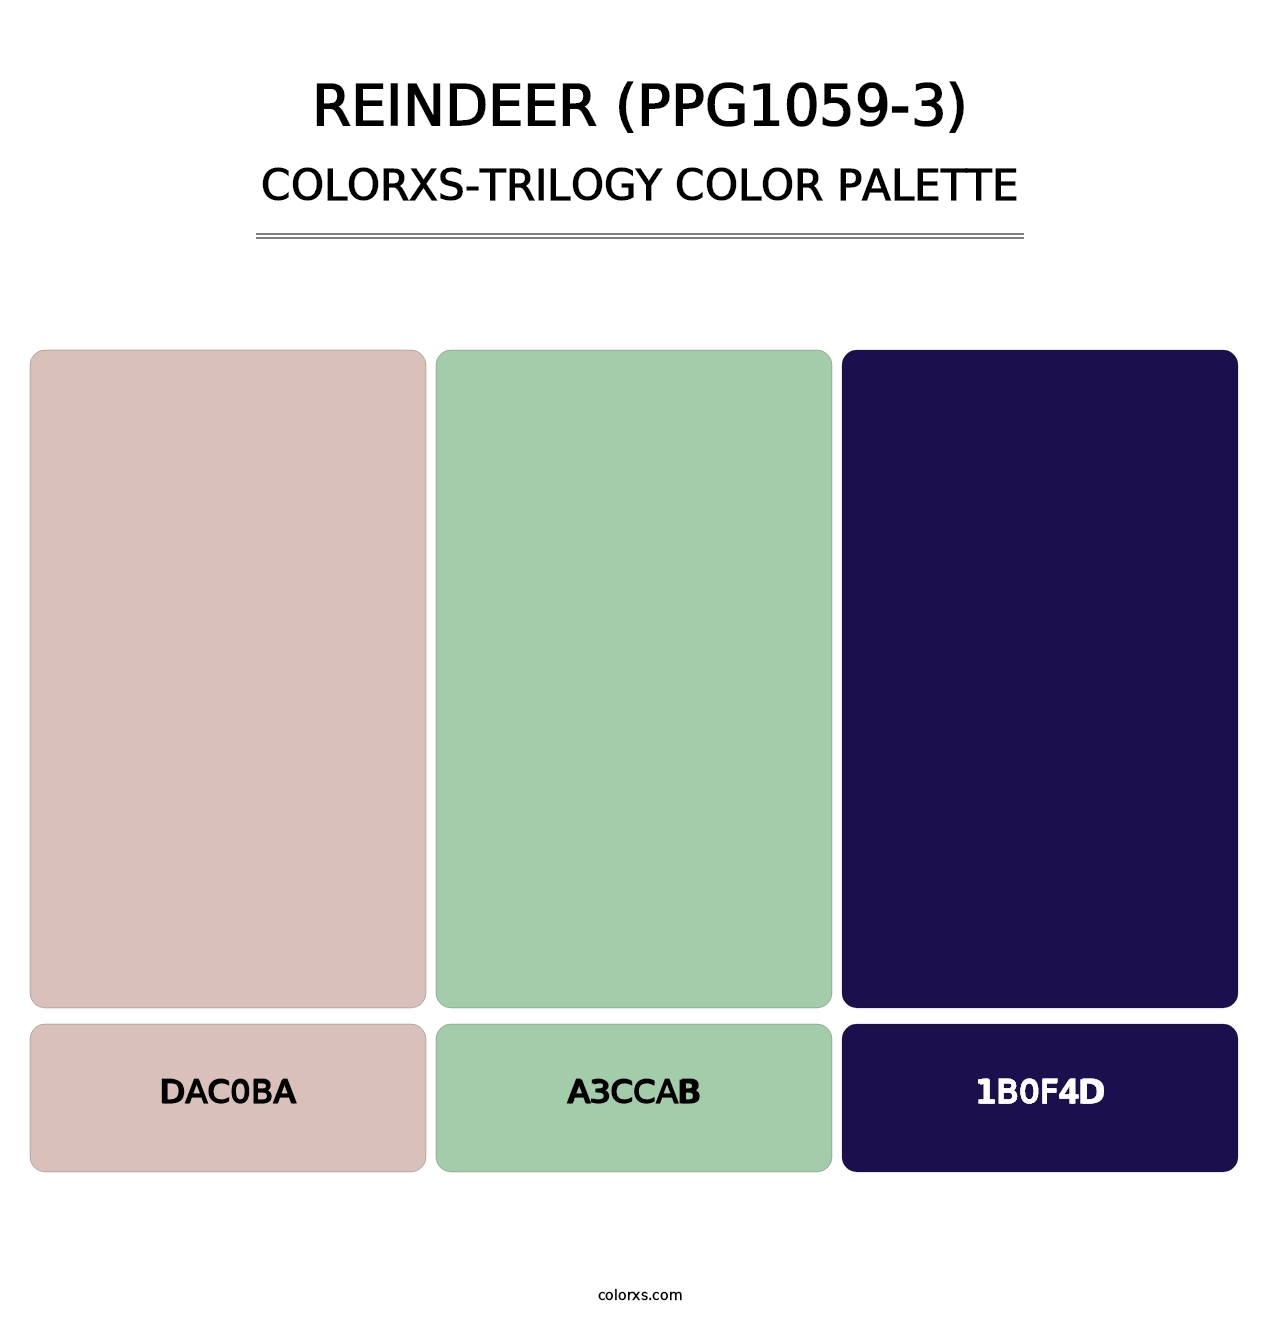 Reindeer (PPG1059-3) - Colorxs Trilogy Palette